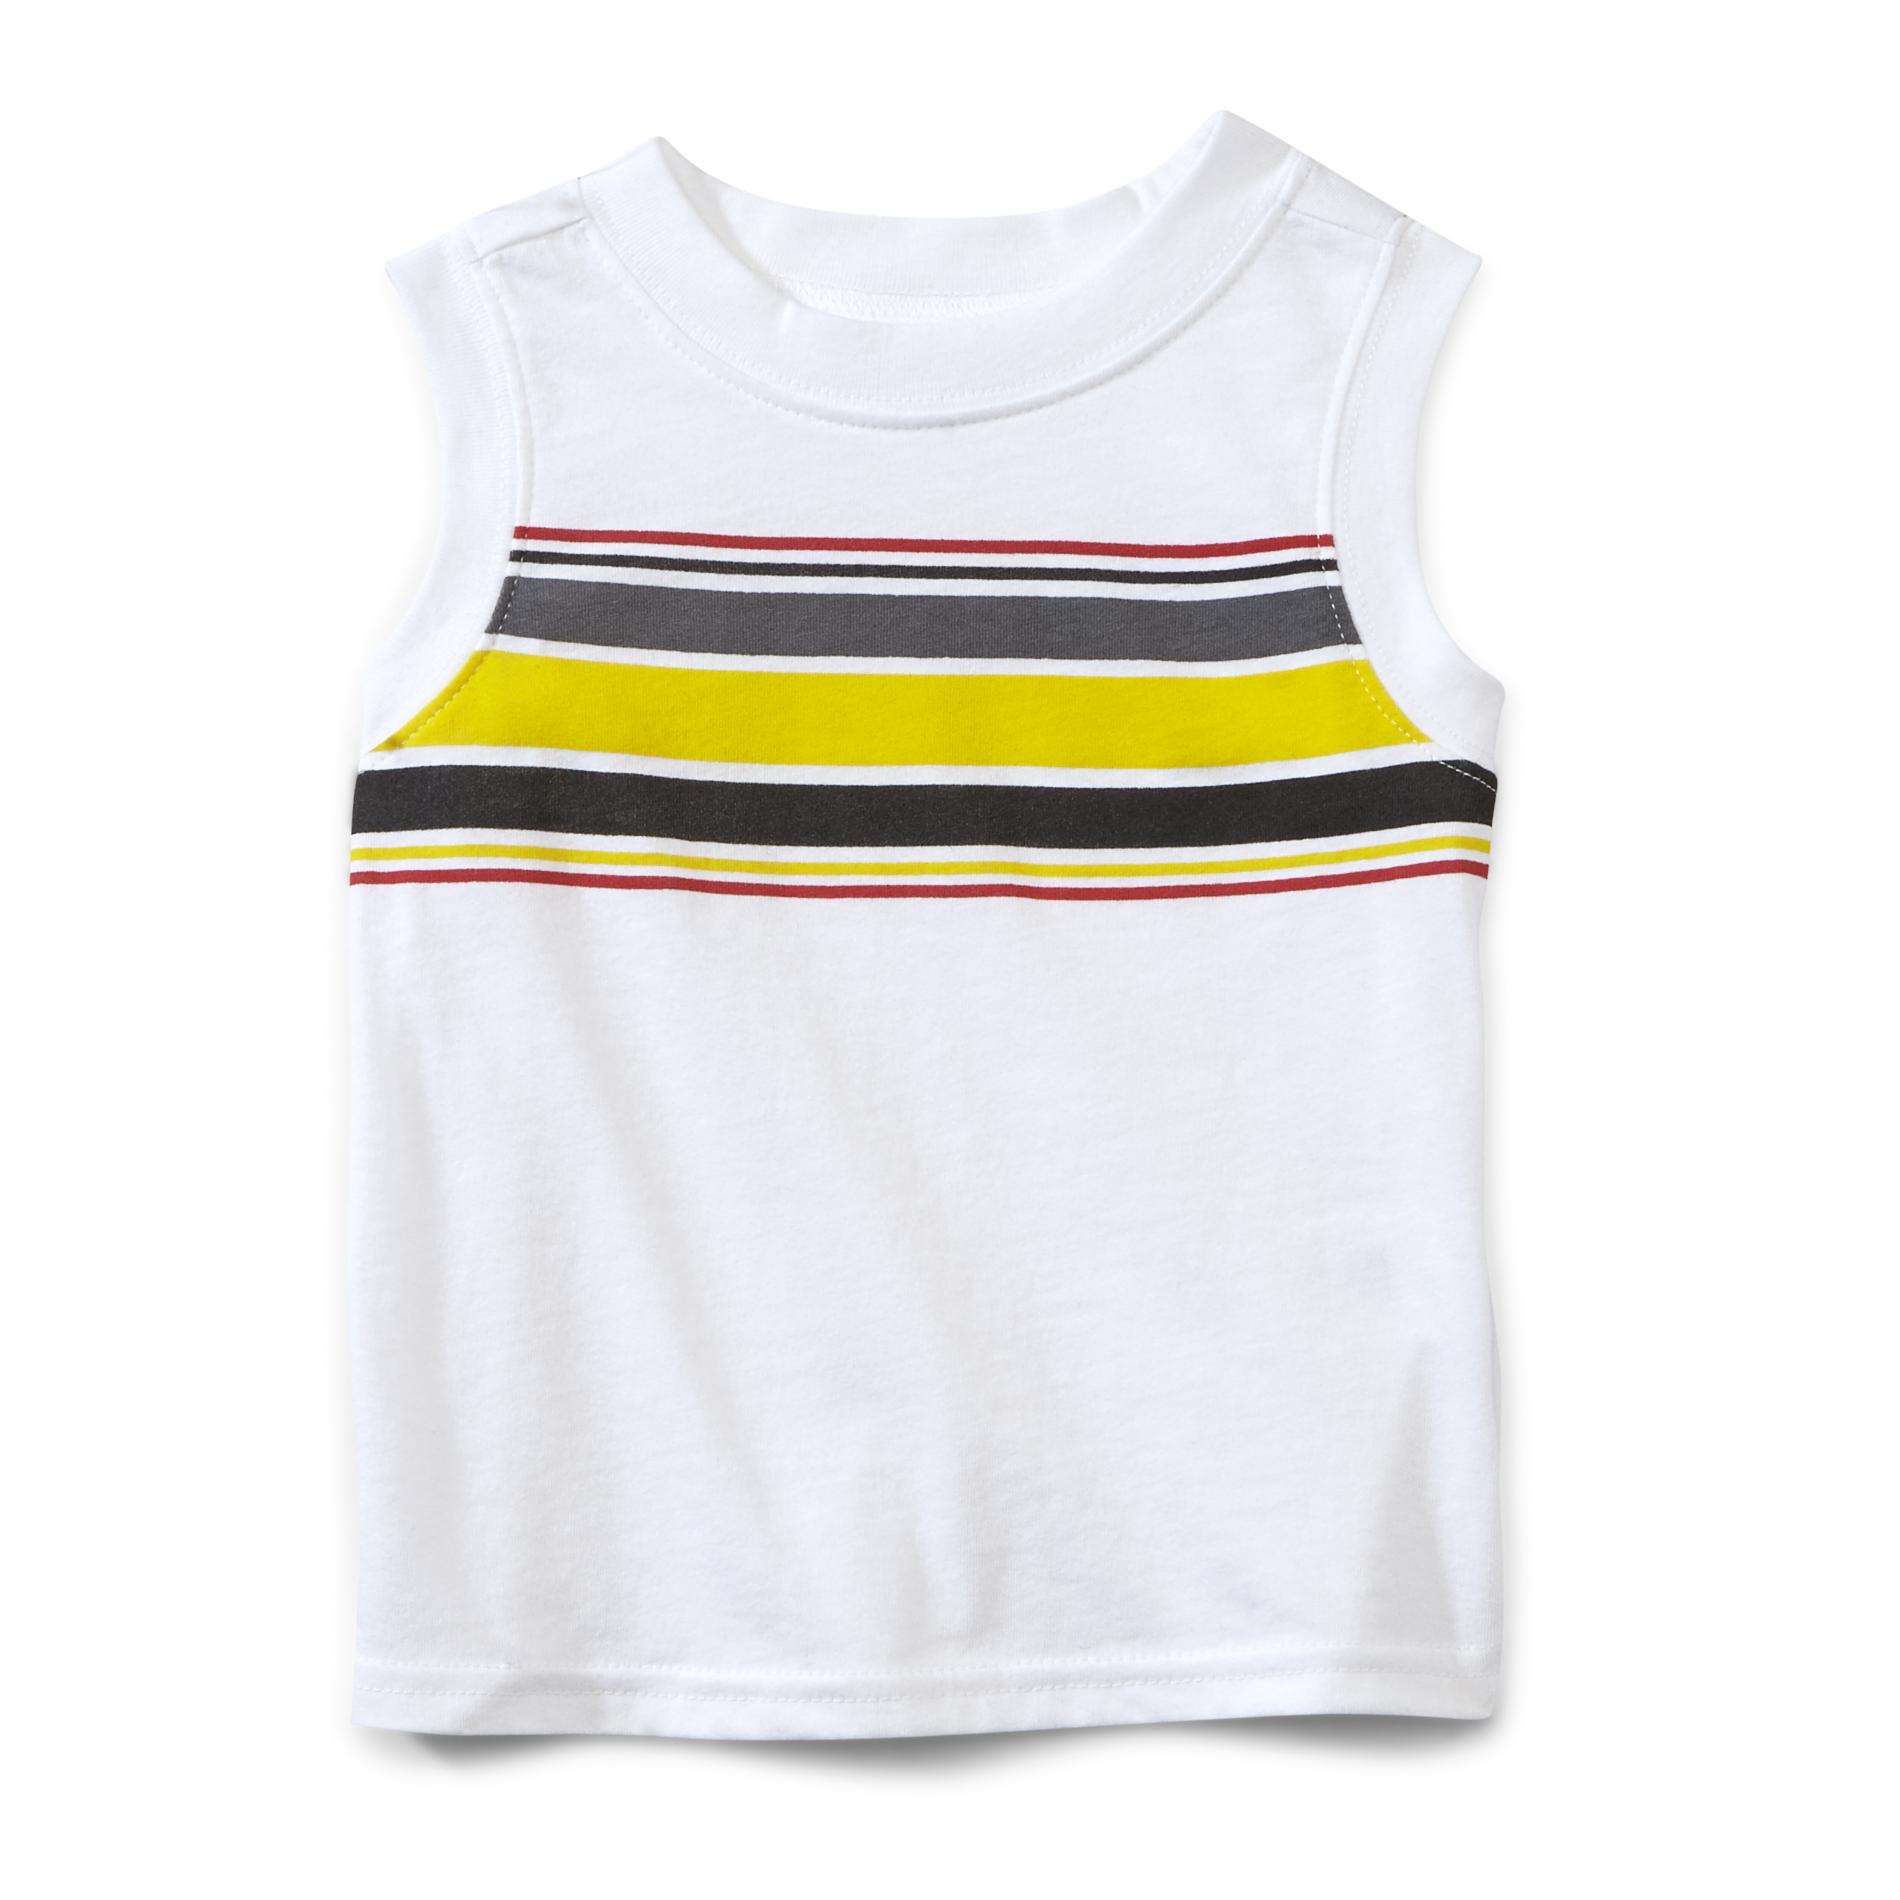 WonderKids Infant Boy's Sleeveless Shirt - Striped